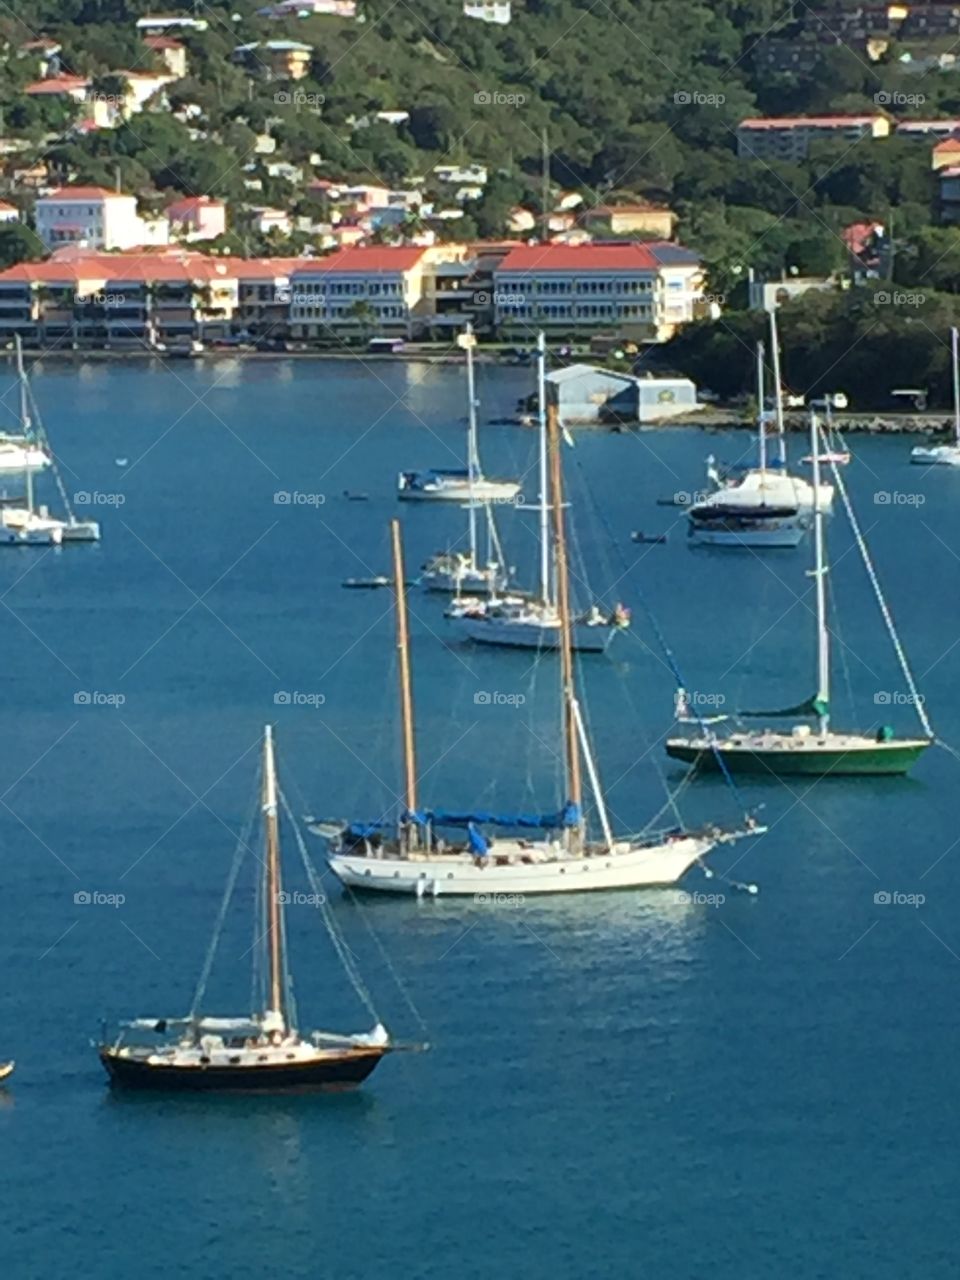 Boats in an island harbor